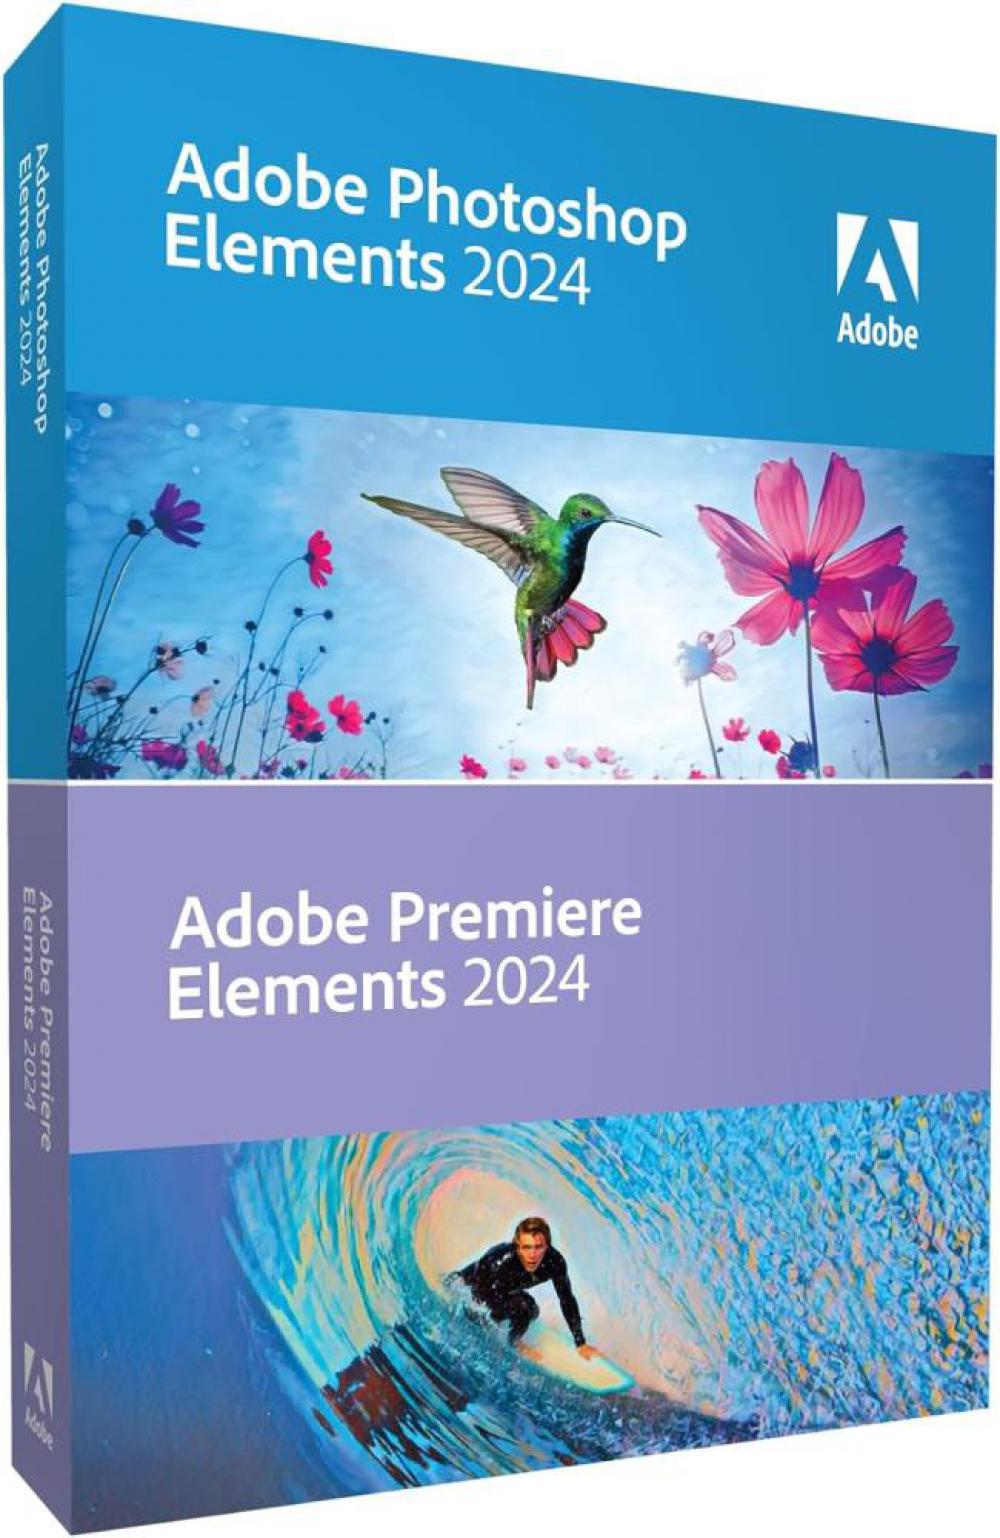 Adobe Photoshop + Premiere Elements 2024 MAC ESD